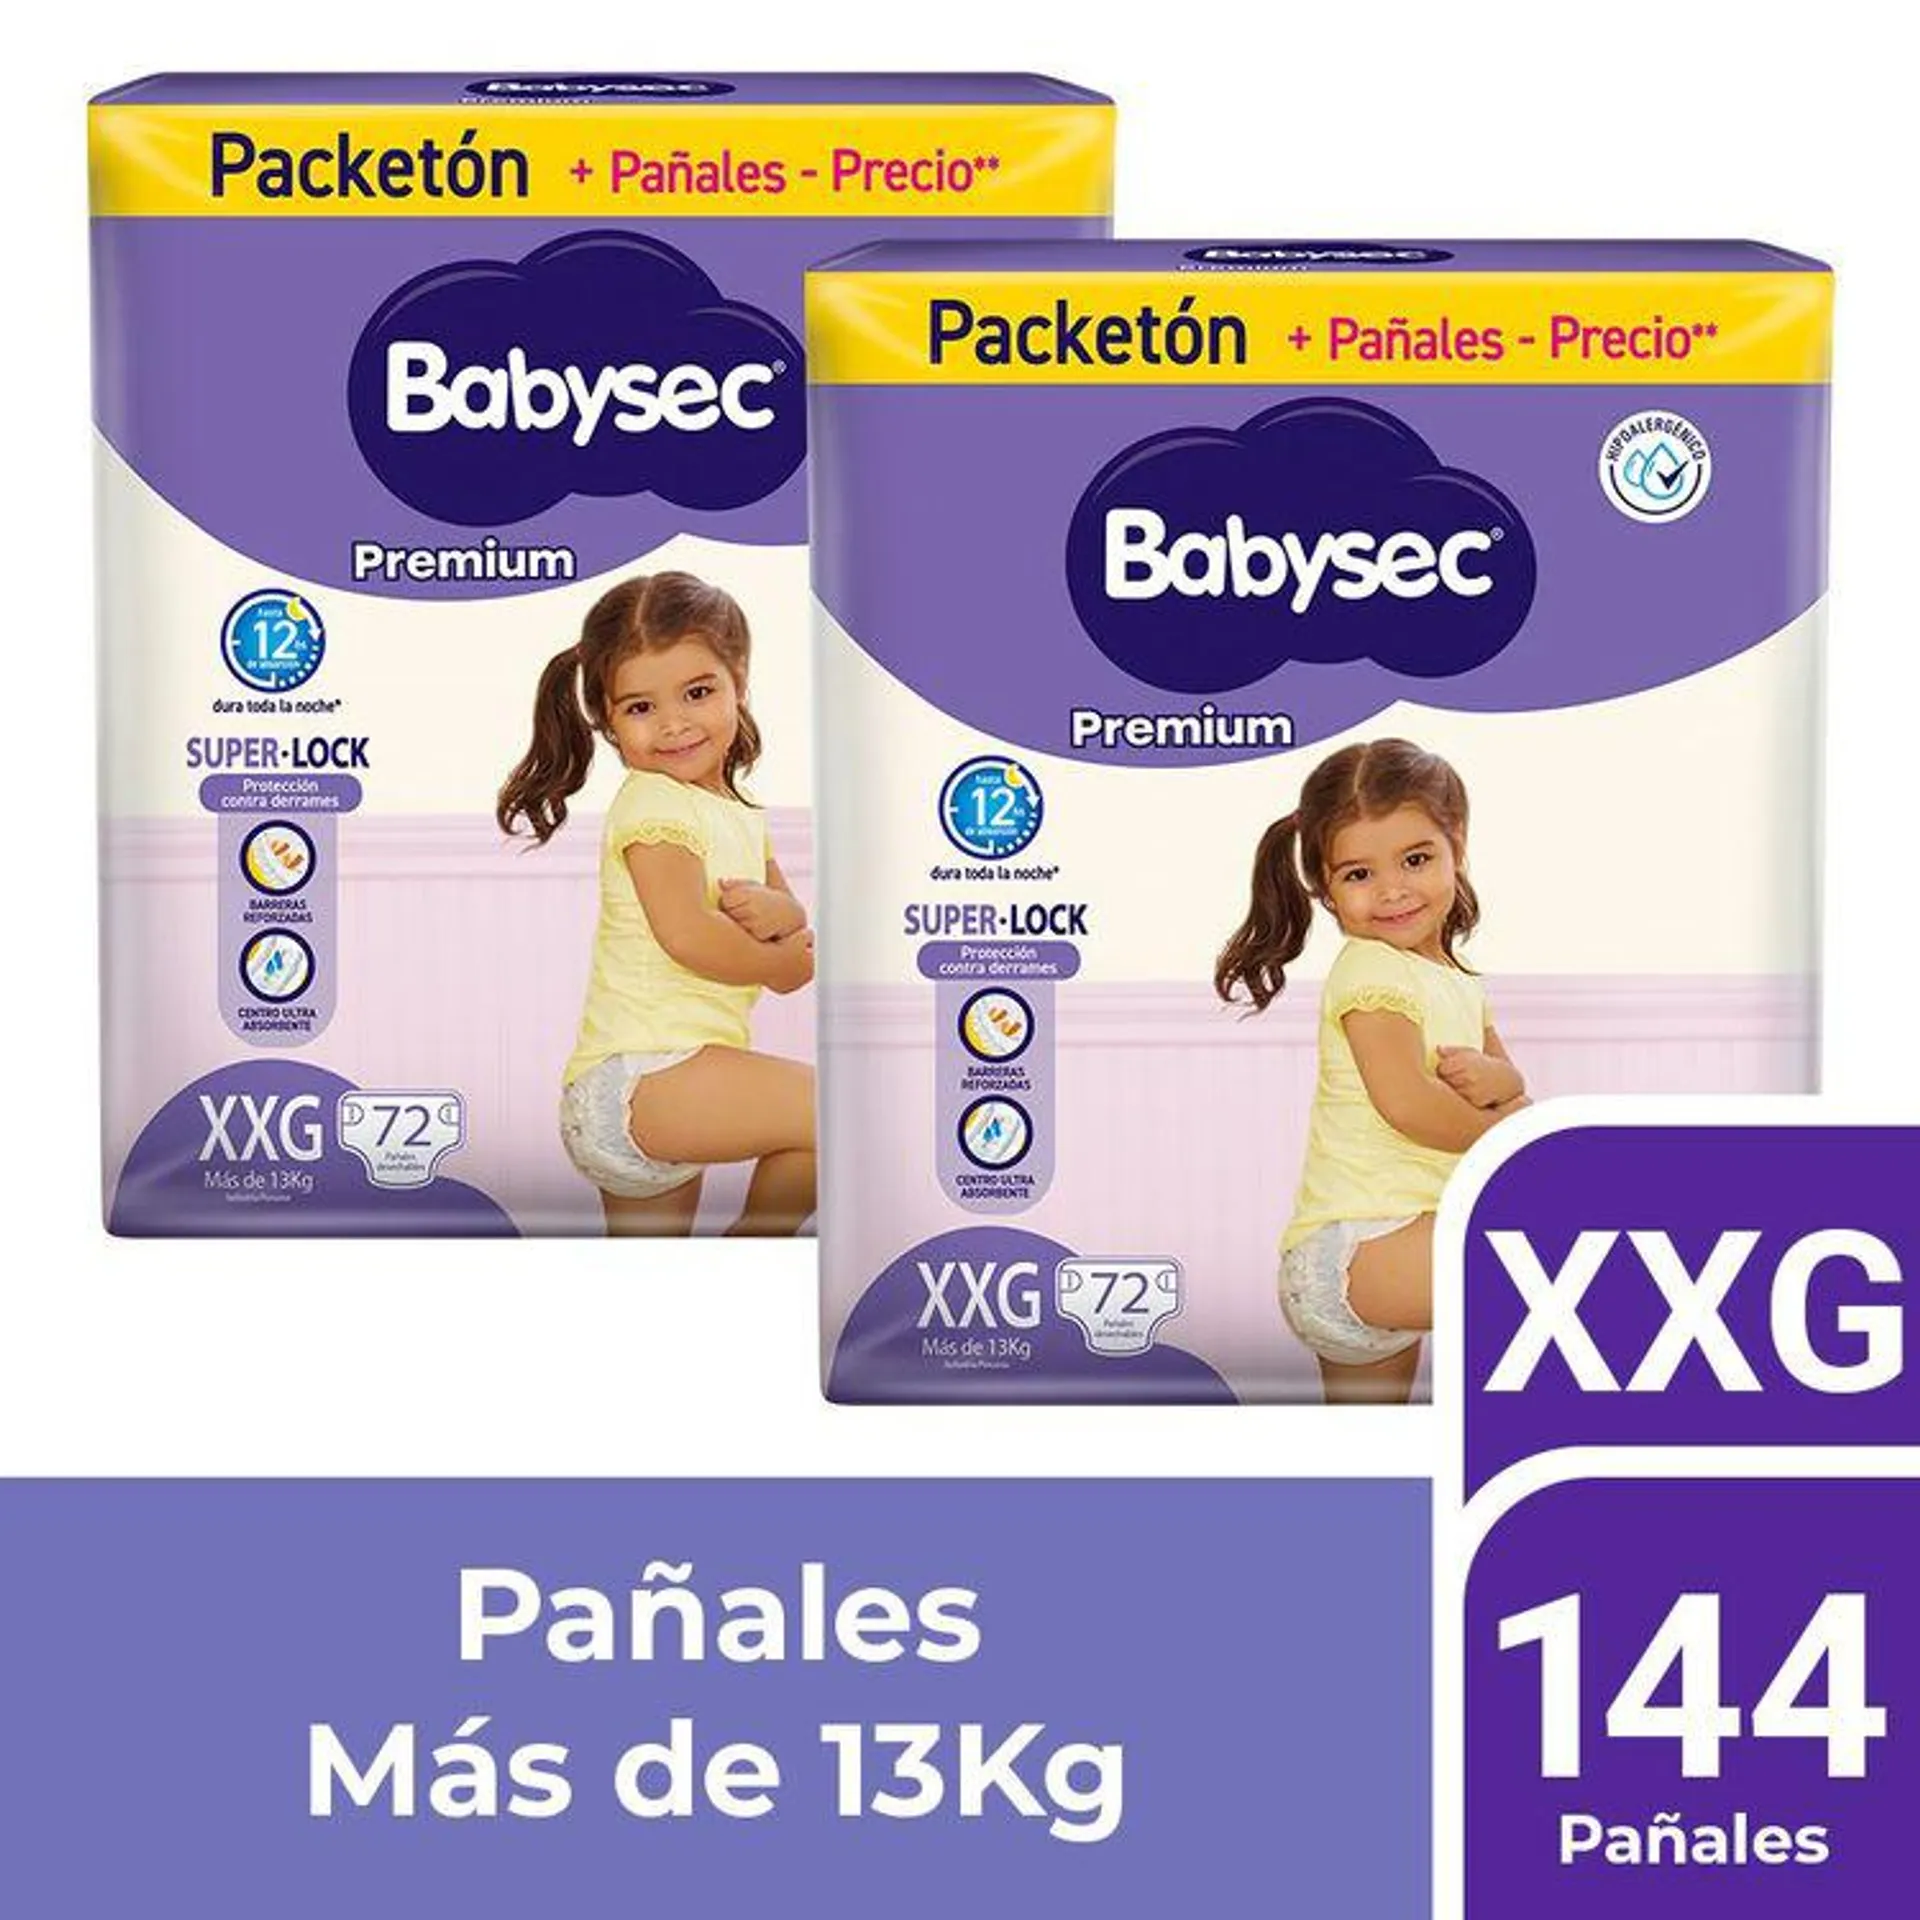 Twopack Pañales para Bebé Babysec Premium Talla XXG 72un